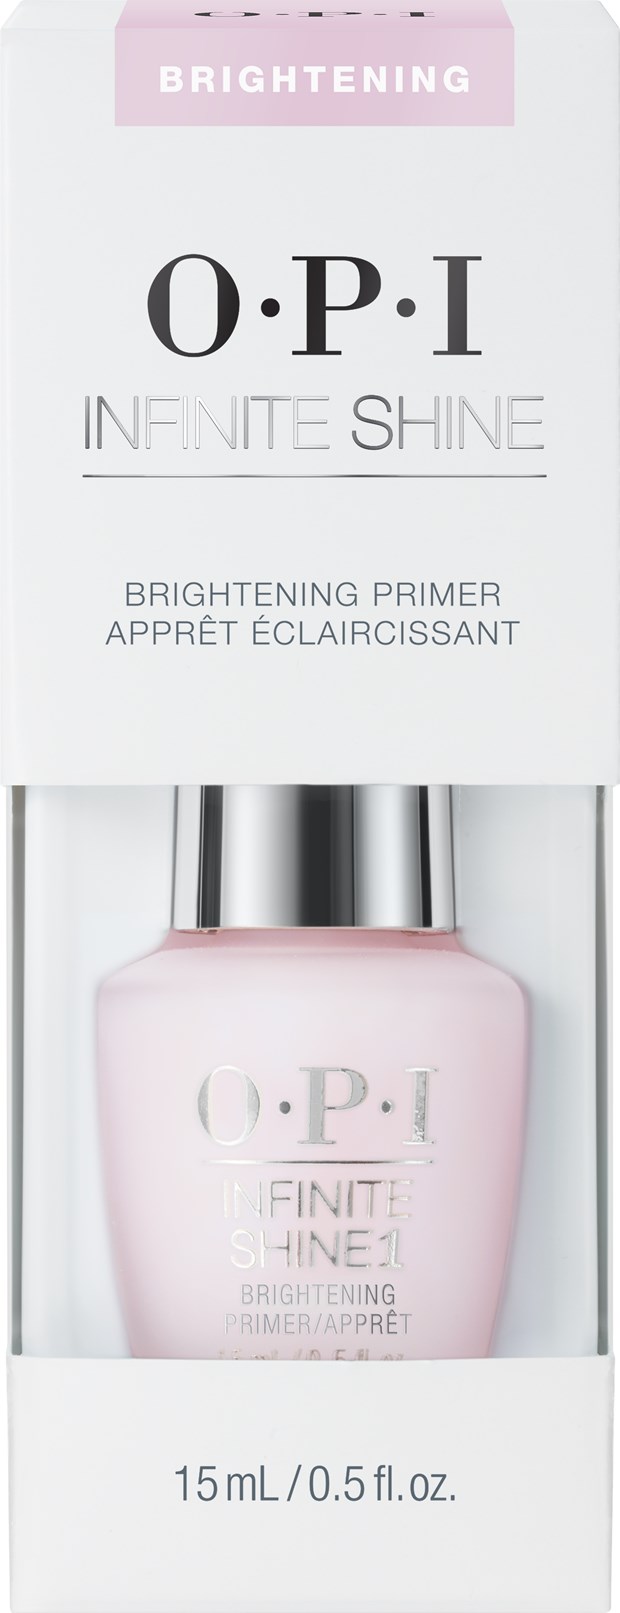 OPI Infinite Shine Brightening Primer - 15ml